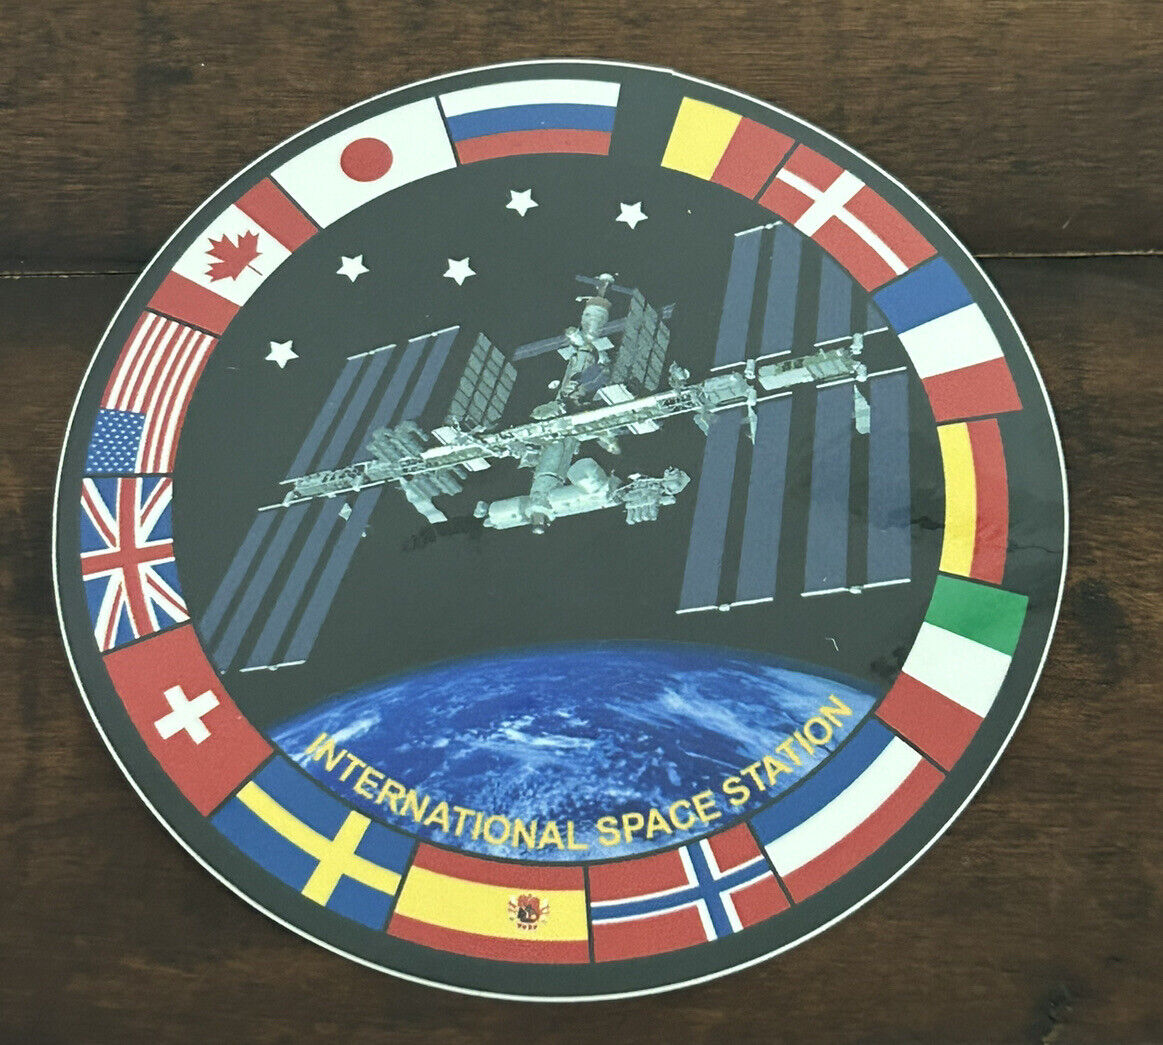 NASA INTERNATIONAL SPACE STATION STICKER DECAL